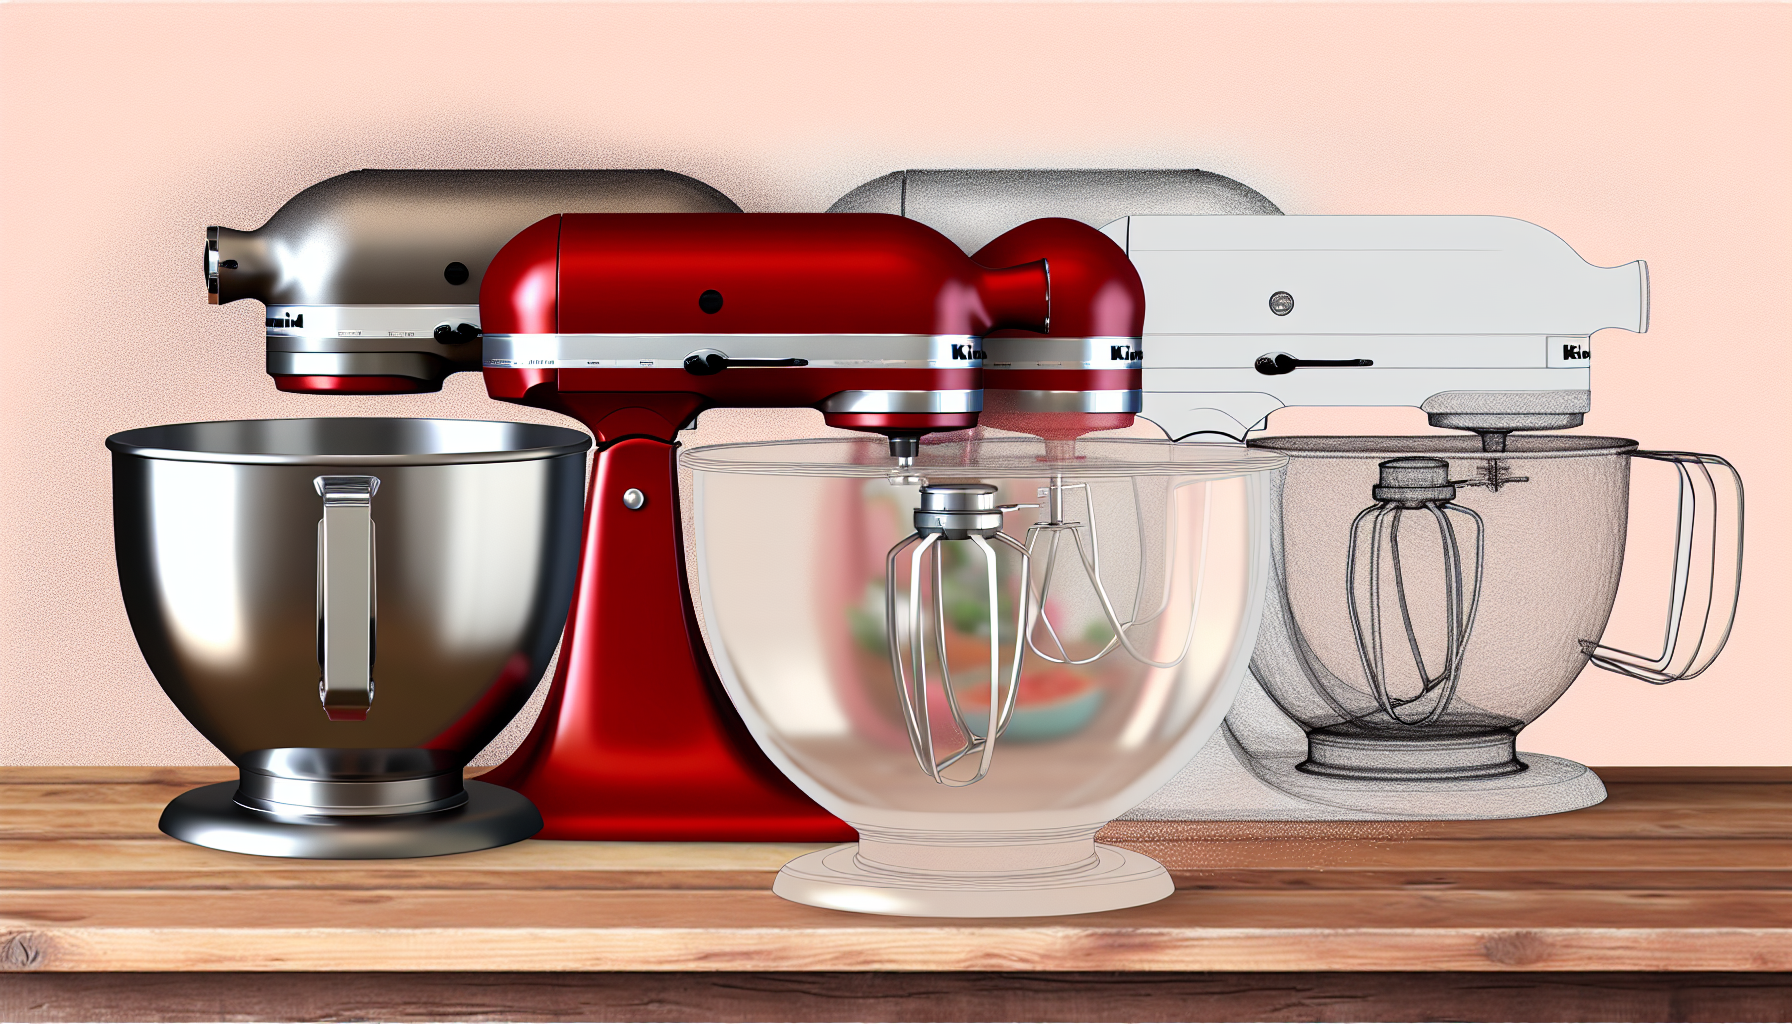 Comparison of different KitchenAid mixer models